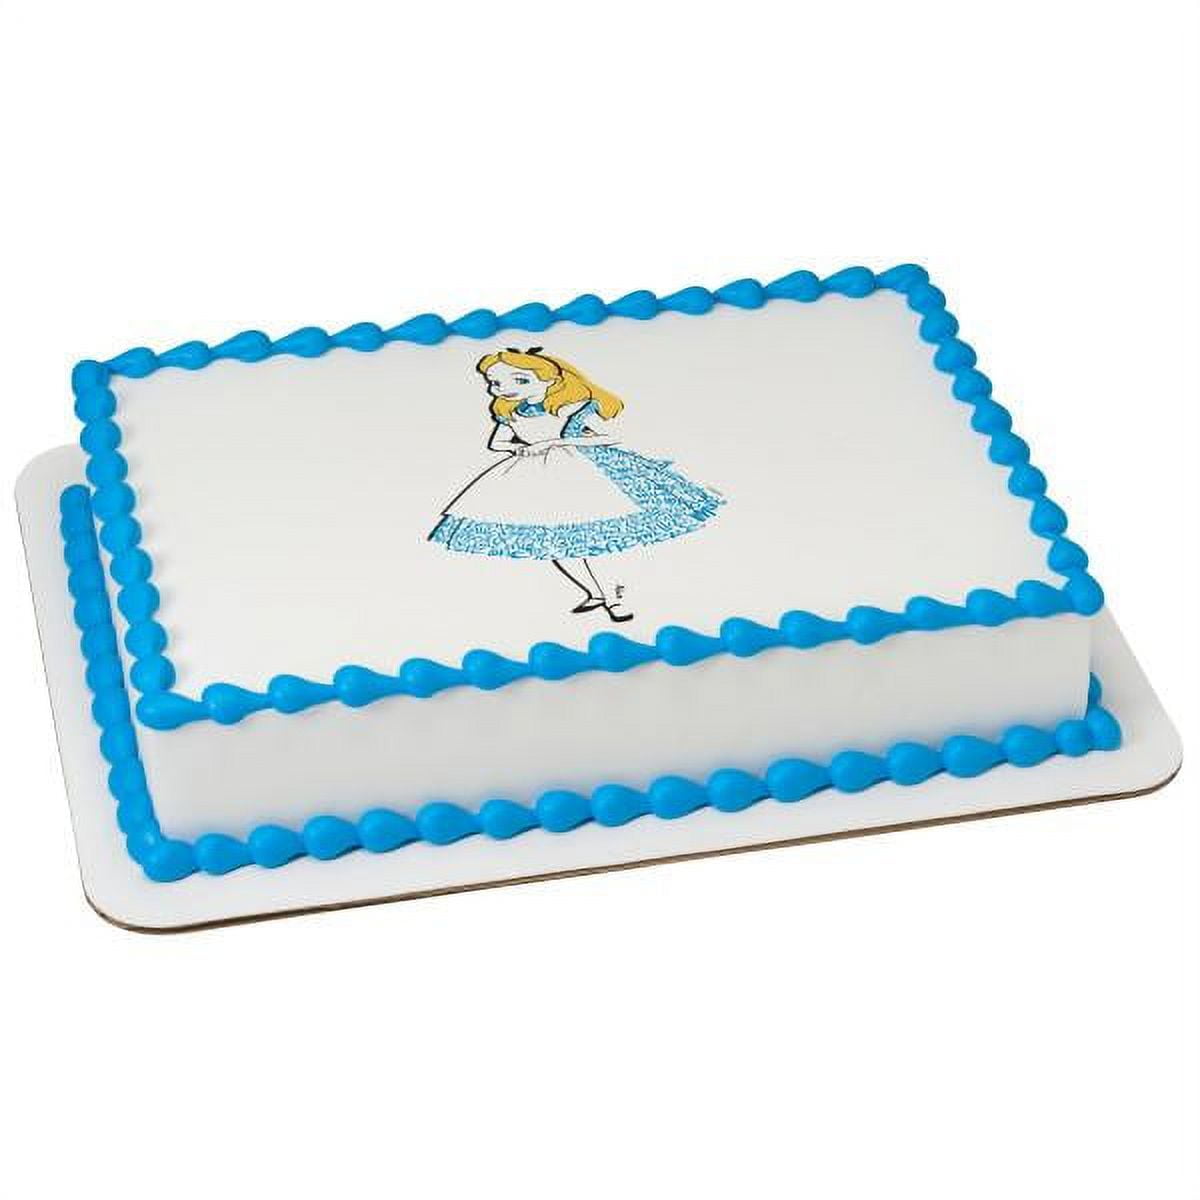 Baby in Wonderland Alice Image Edible Cake Topper Frosting sheet 